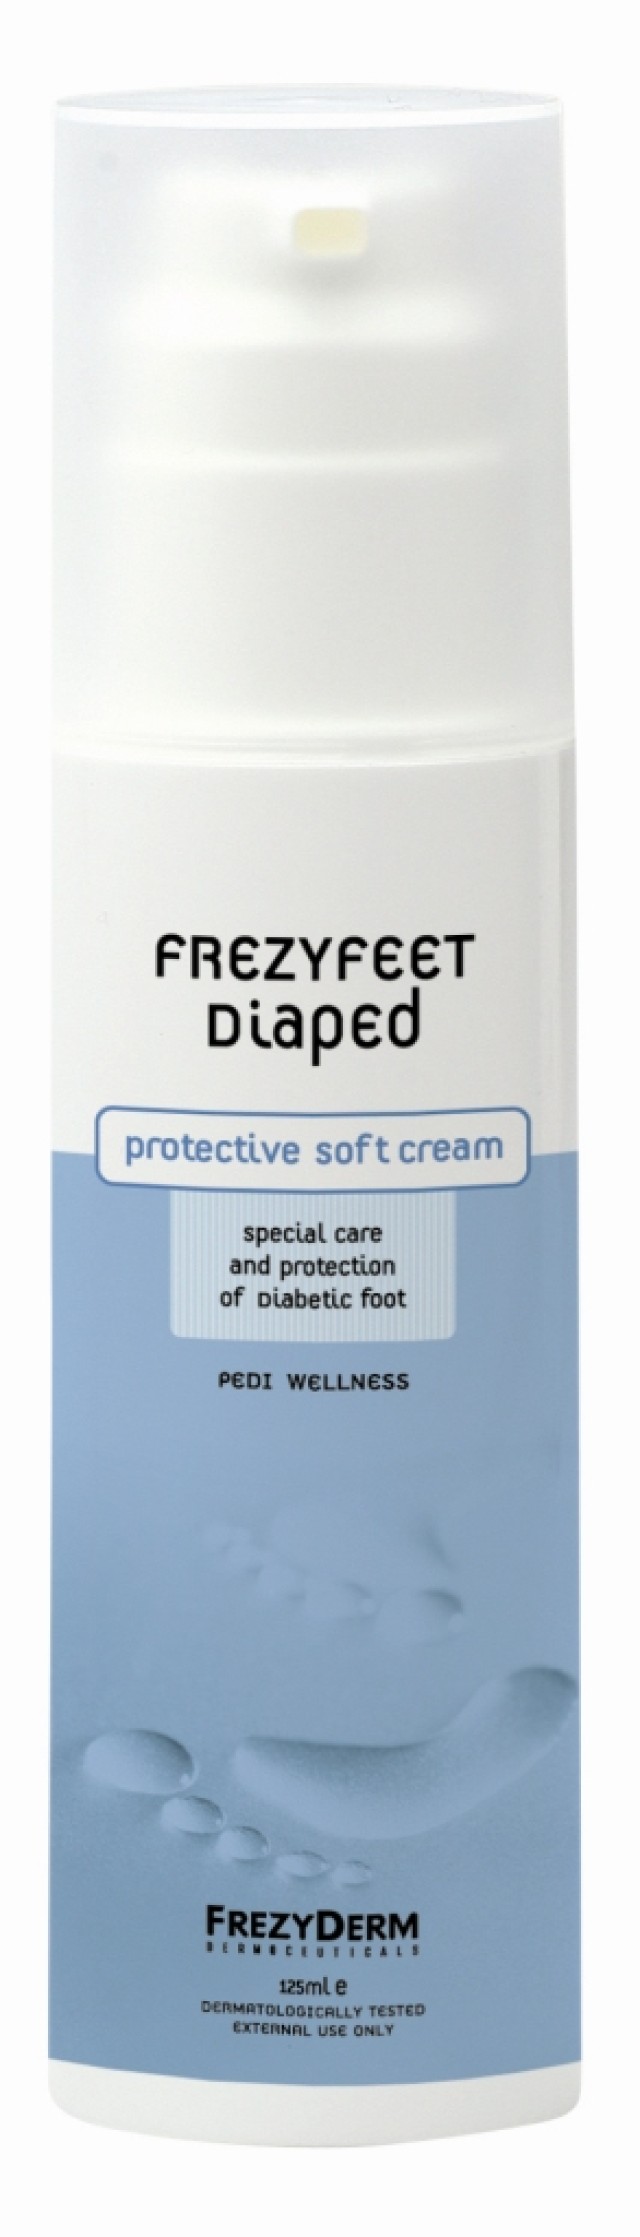 Frezyderm FrezyFeet Diaped Cream Κρέμα Προστασίας και Περιποίησης για το Διαβητικό Πόδι, 125ml